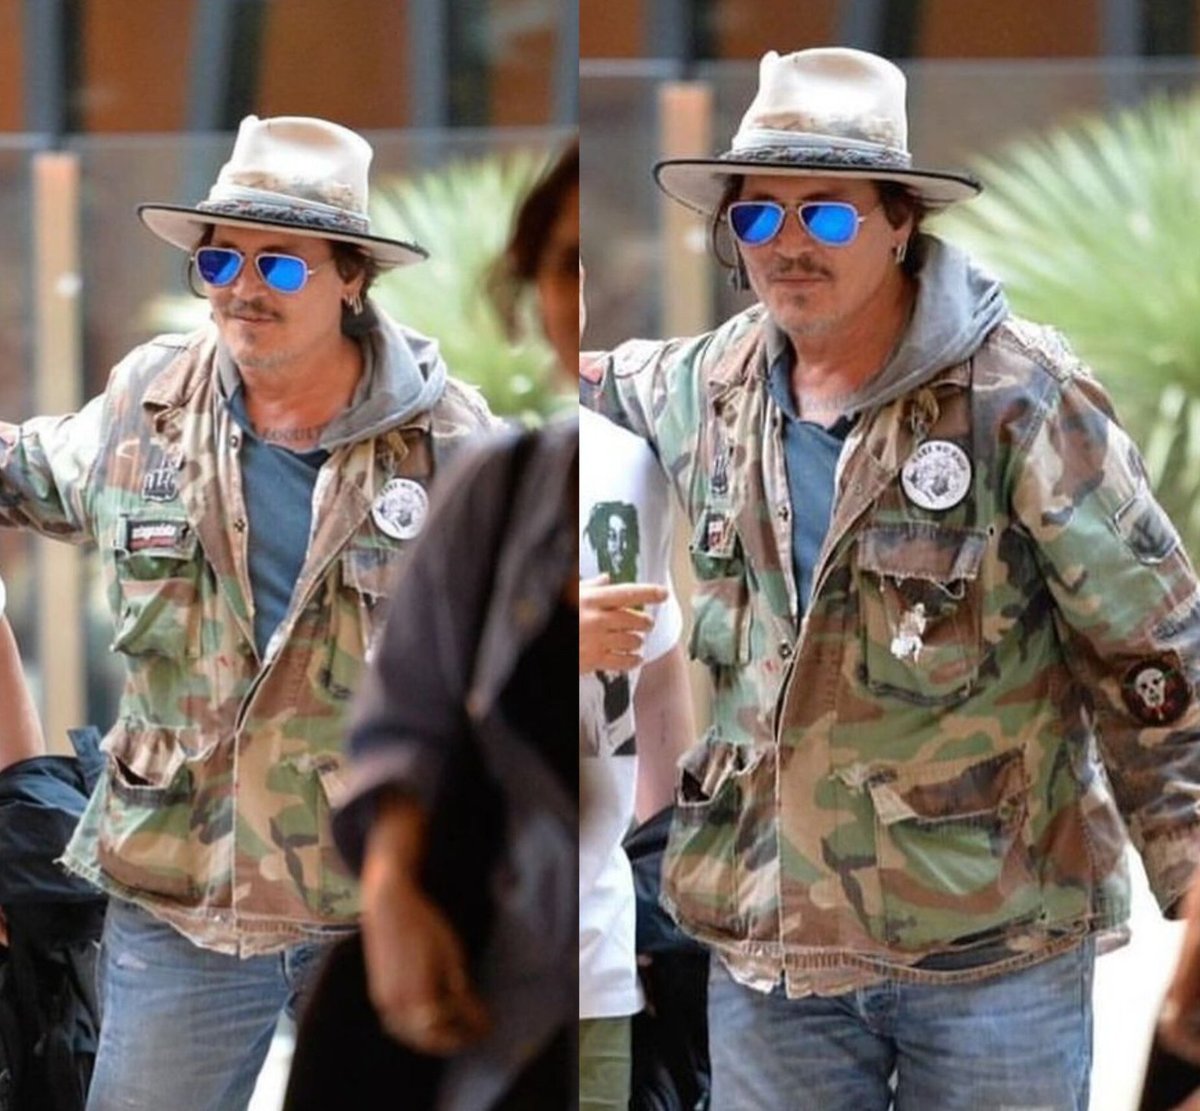 Johnny Depp | 2024 😎🩶
#JohnnyDeppKeepsWinning 
#JohnnyDeppIsABeautifulSoul